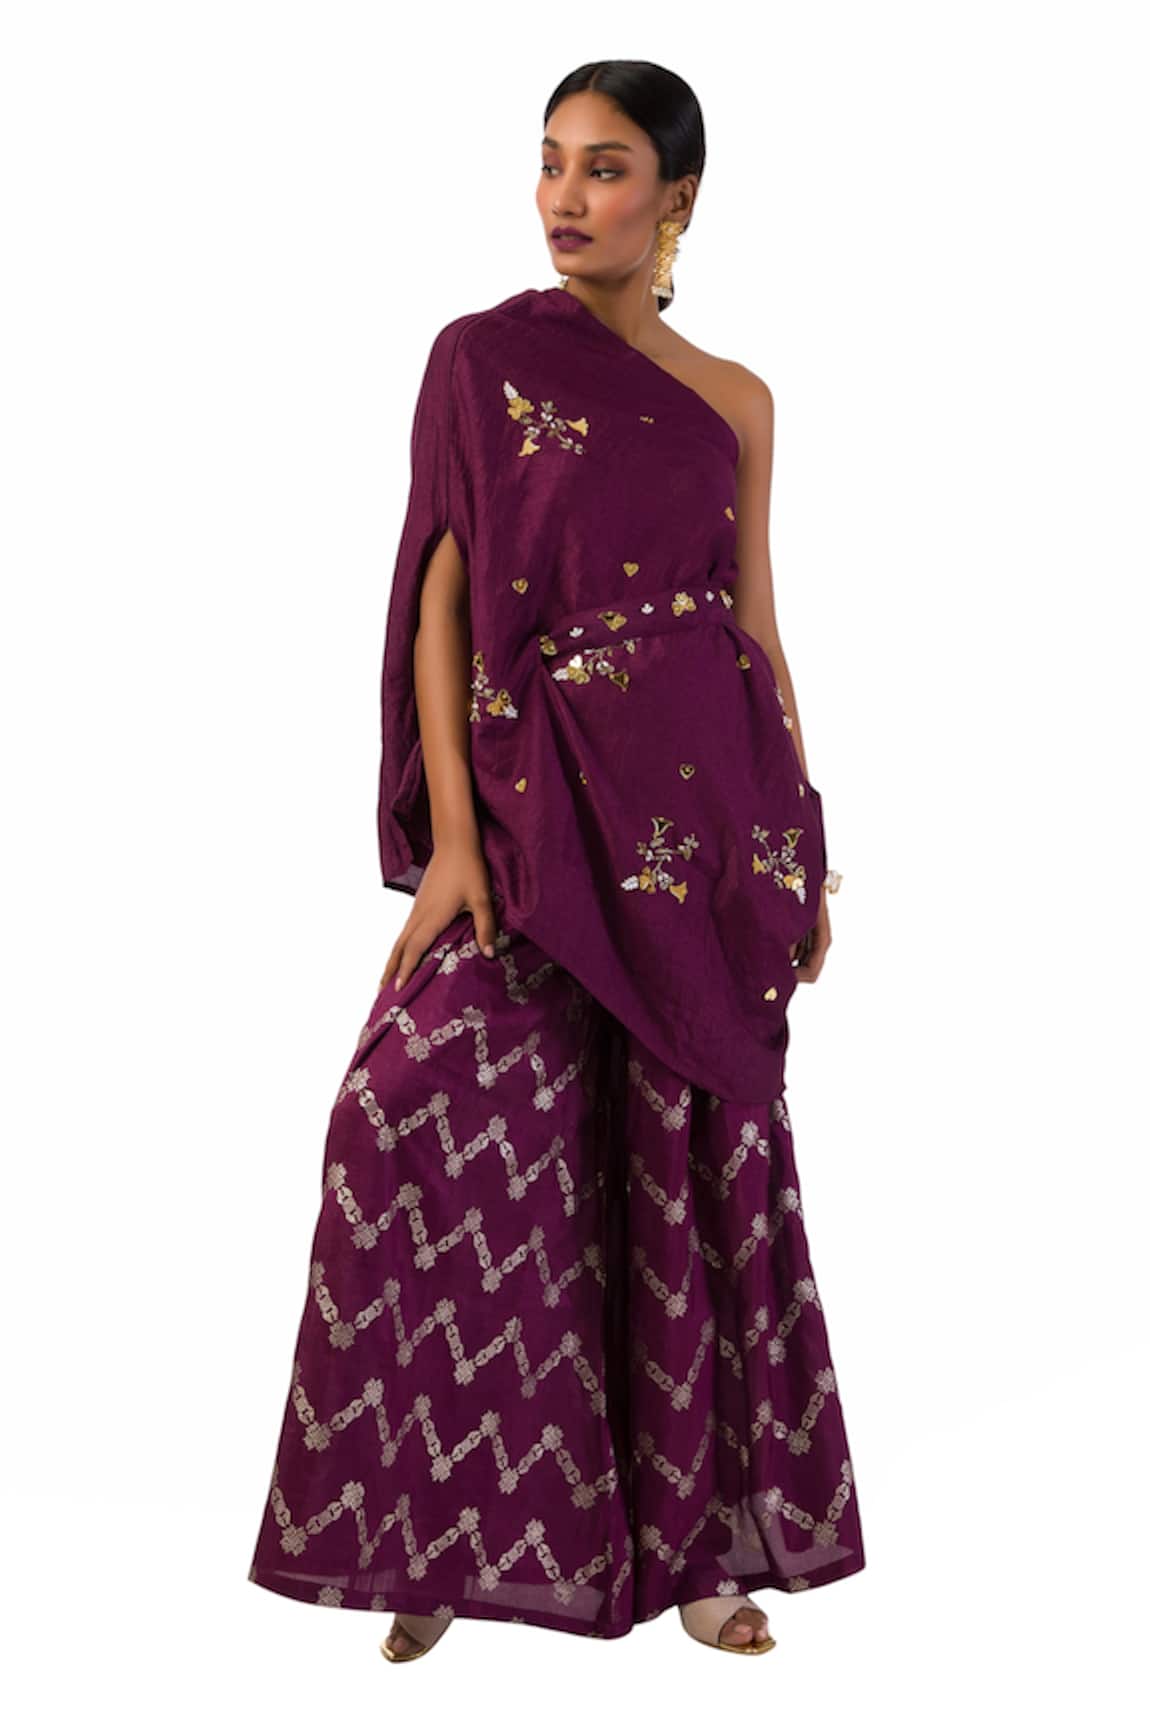 Meghna shah Embroidered One-Shoulder Top & Pant Set